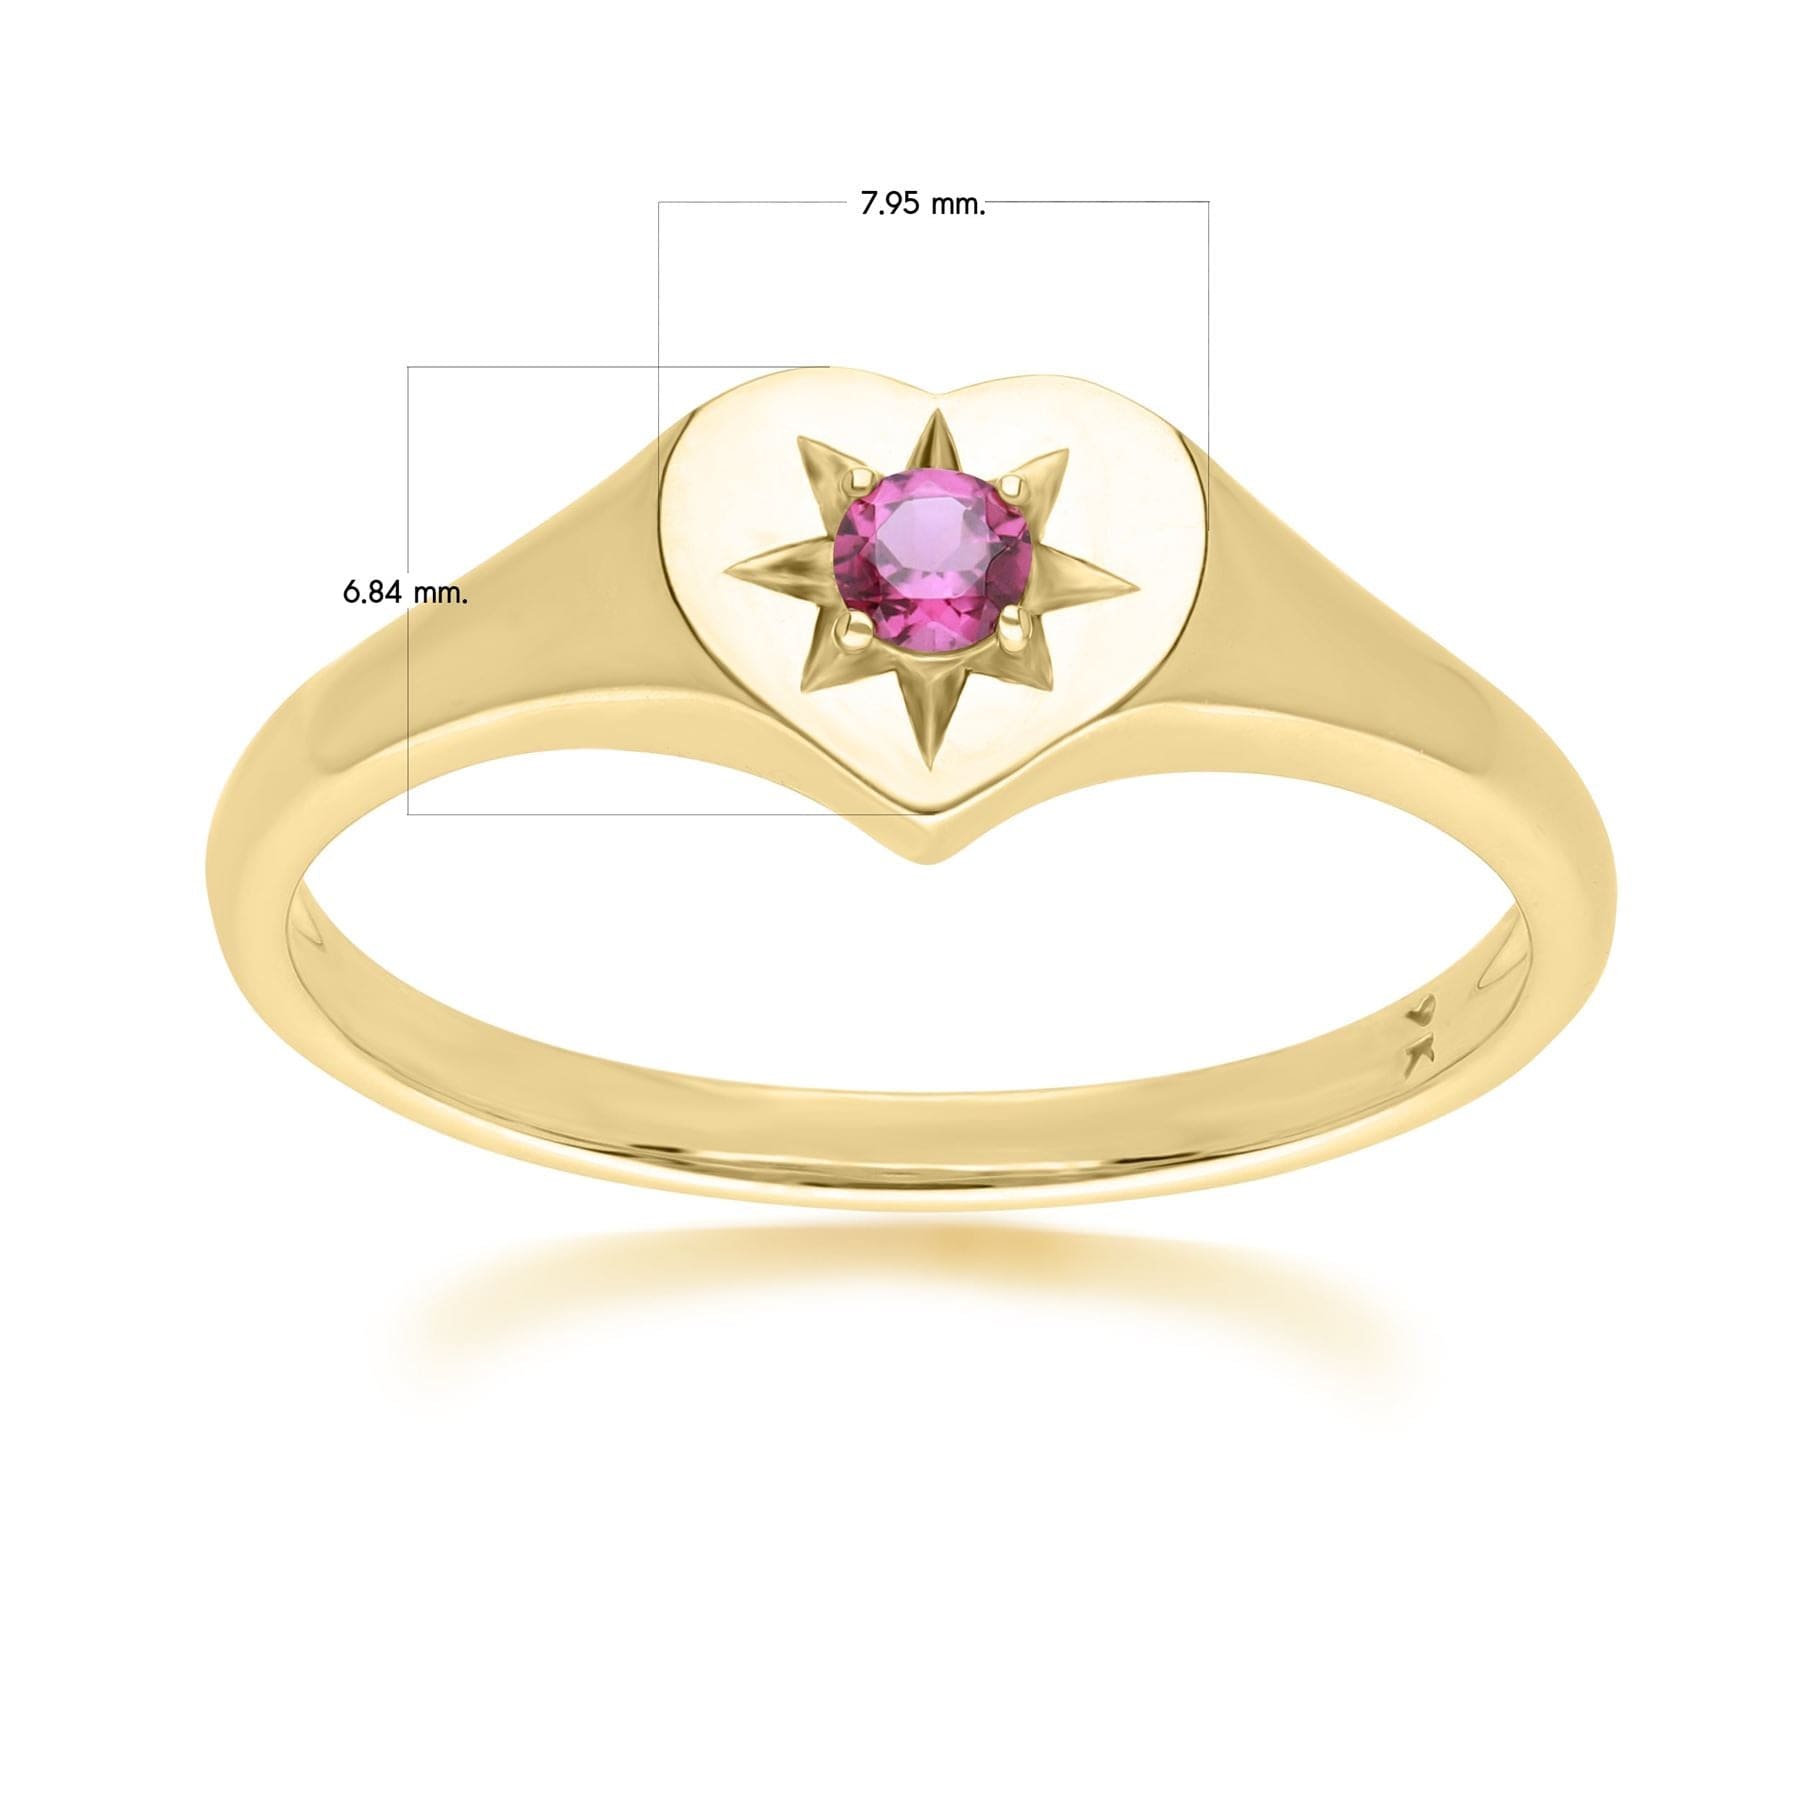 ECFEW™ 'The Liberator' Rhodolite Heart Ring in 9ct Yellow Gold - Gemondo